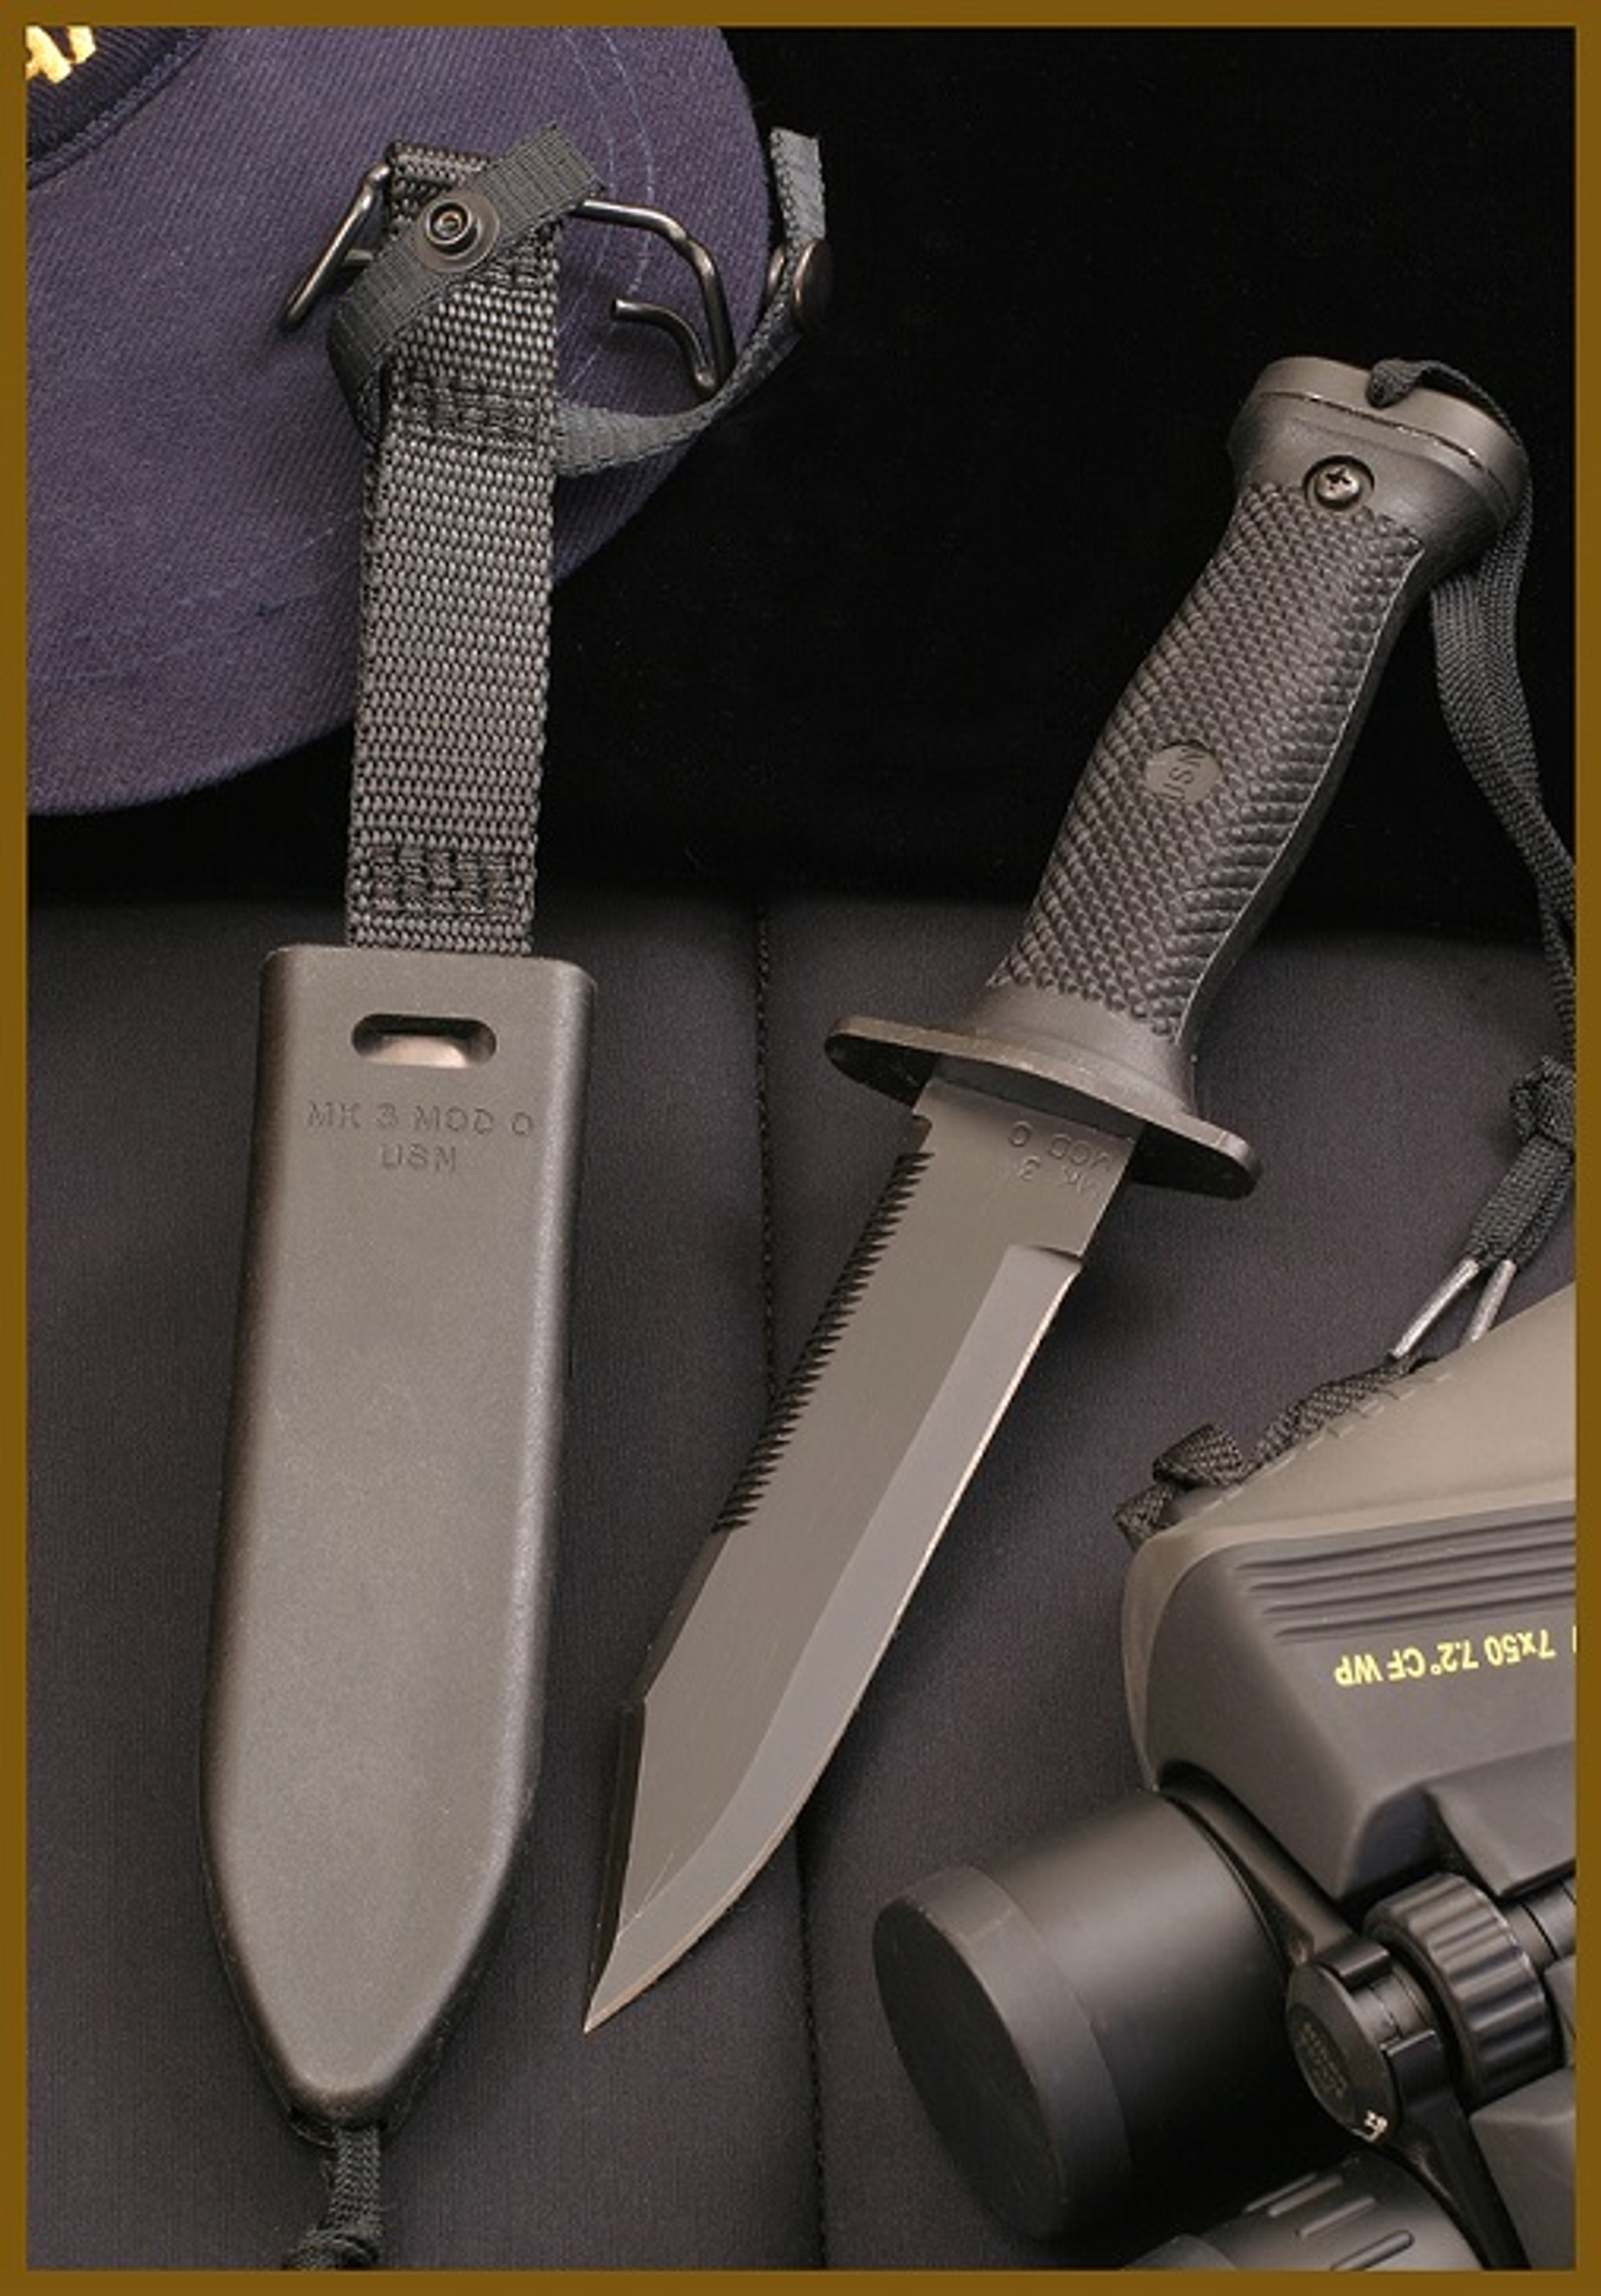 OKC 6141 MK 3 Navy Knife